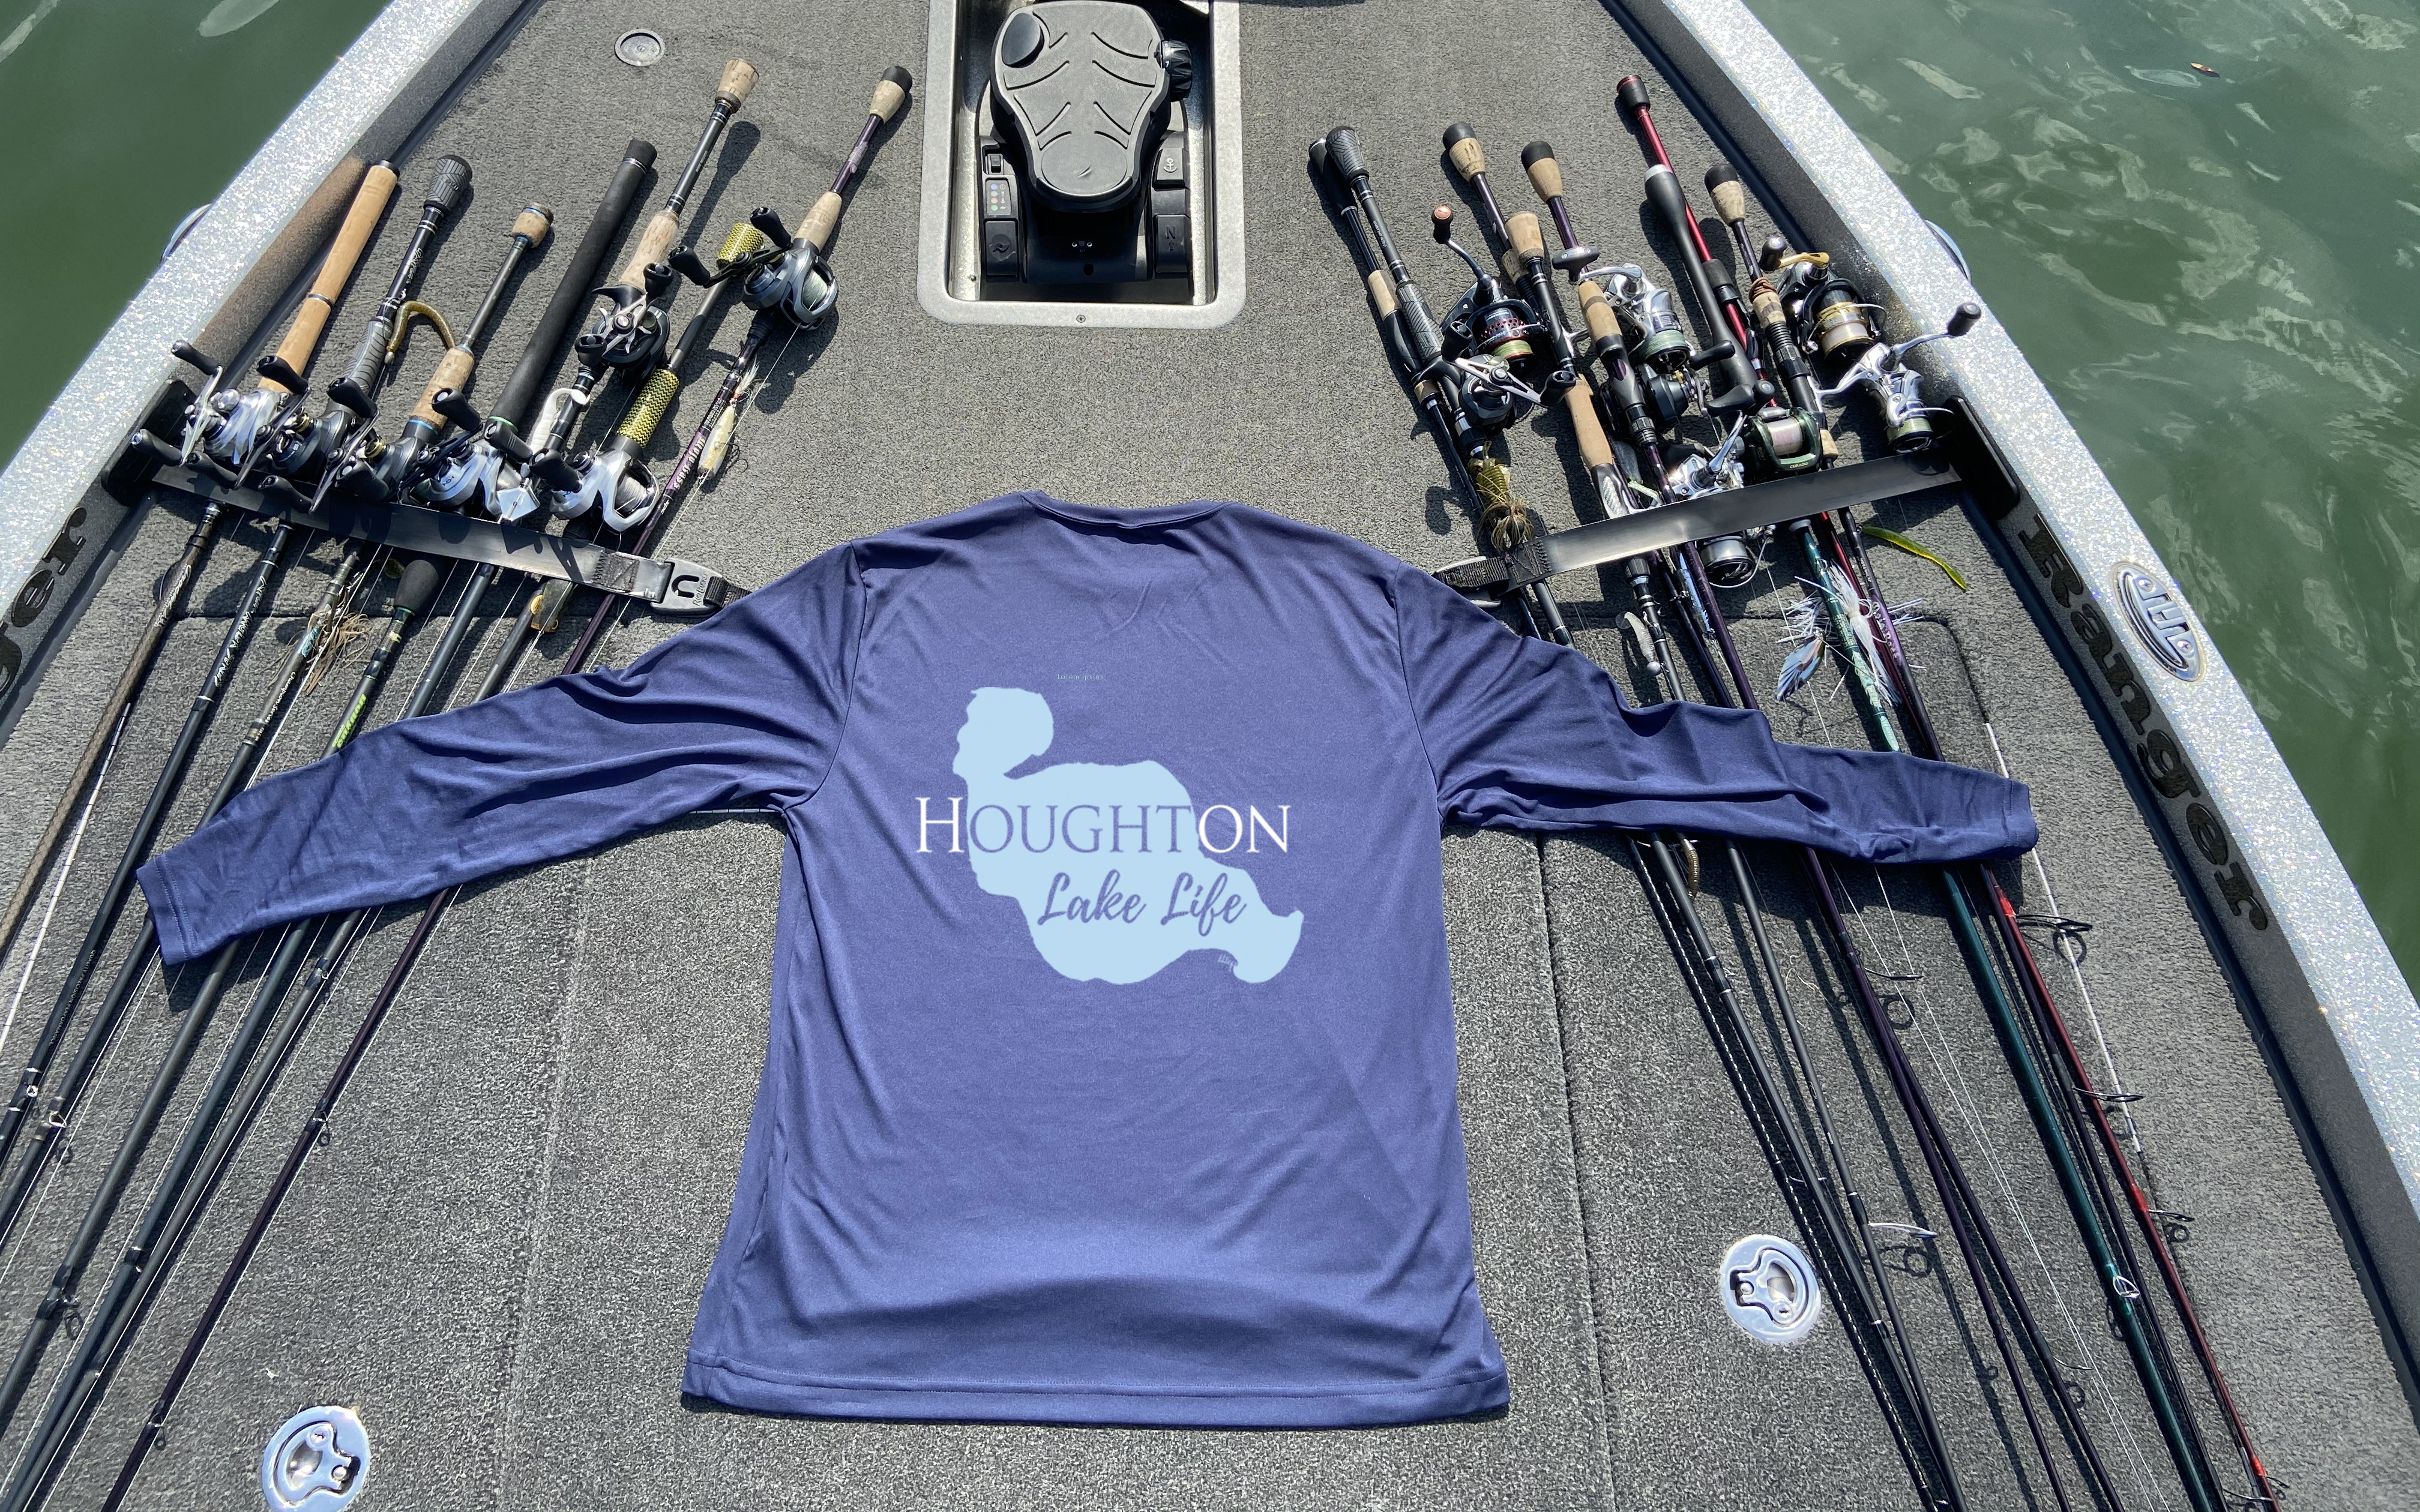 Houghton Lake Life Dri-fit Boating Shirt - Breathable Material- Men's Long Sleeve Moisture Wicking Tee - Michigan Lake